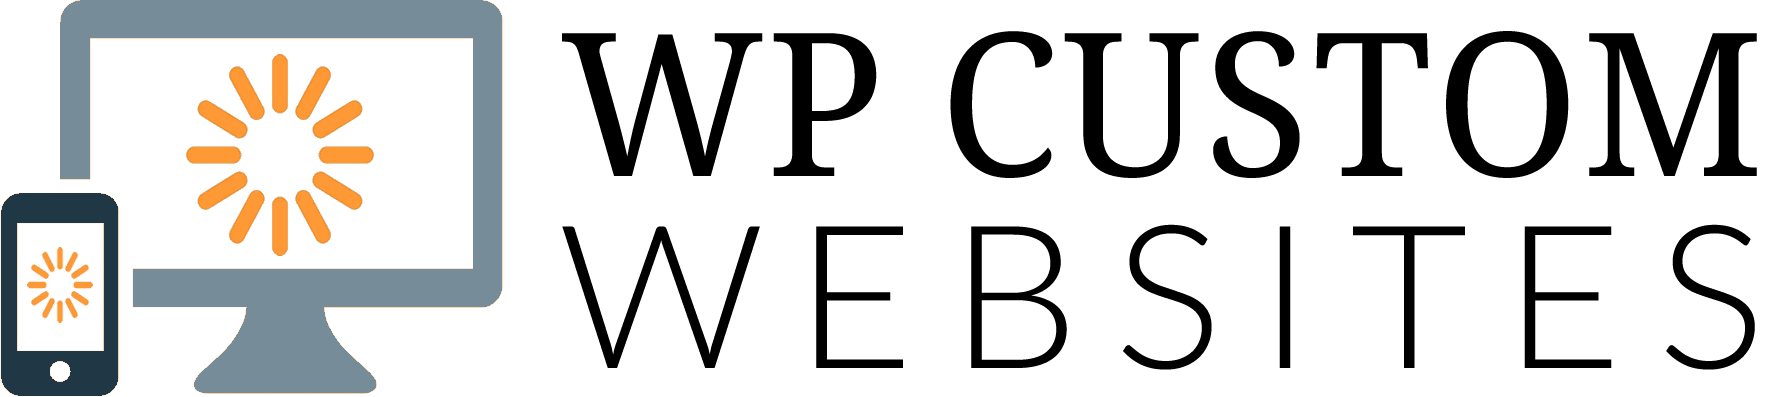 WP custom Websites logo